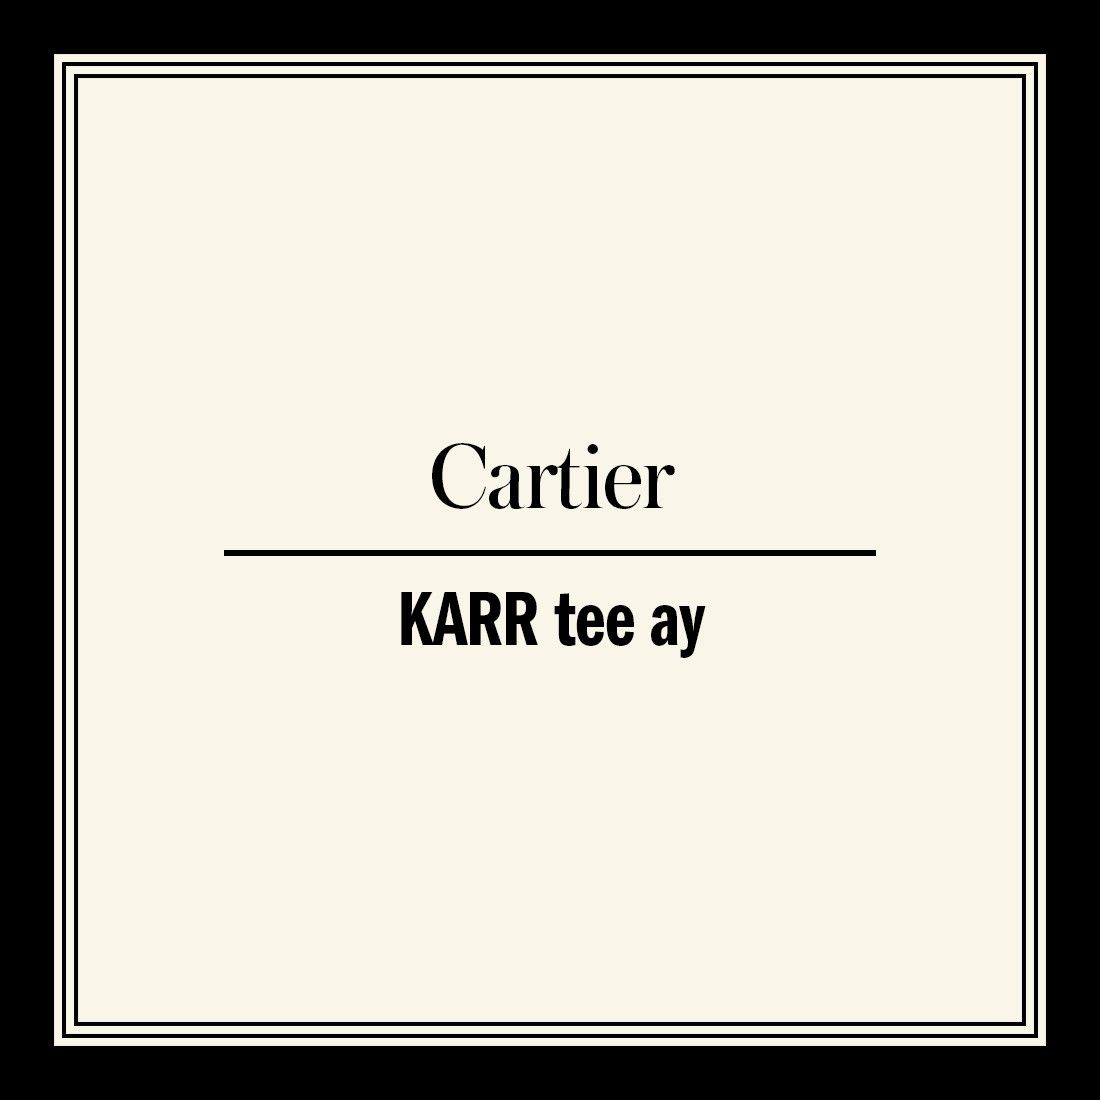 cartier brand pronunciation